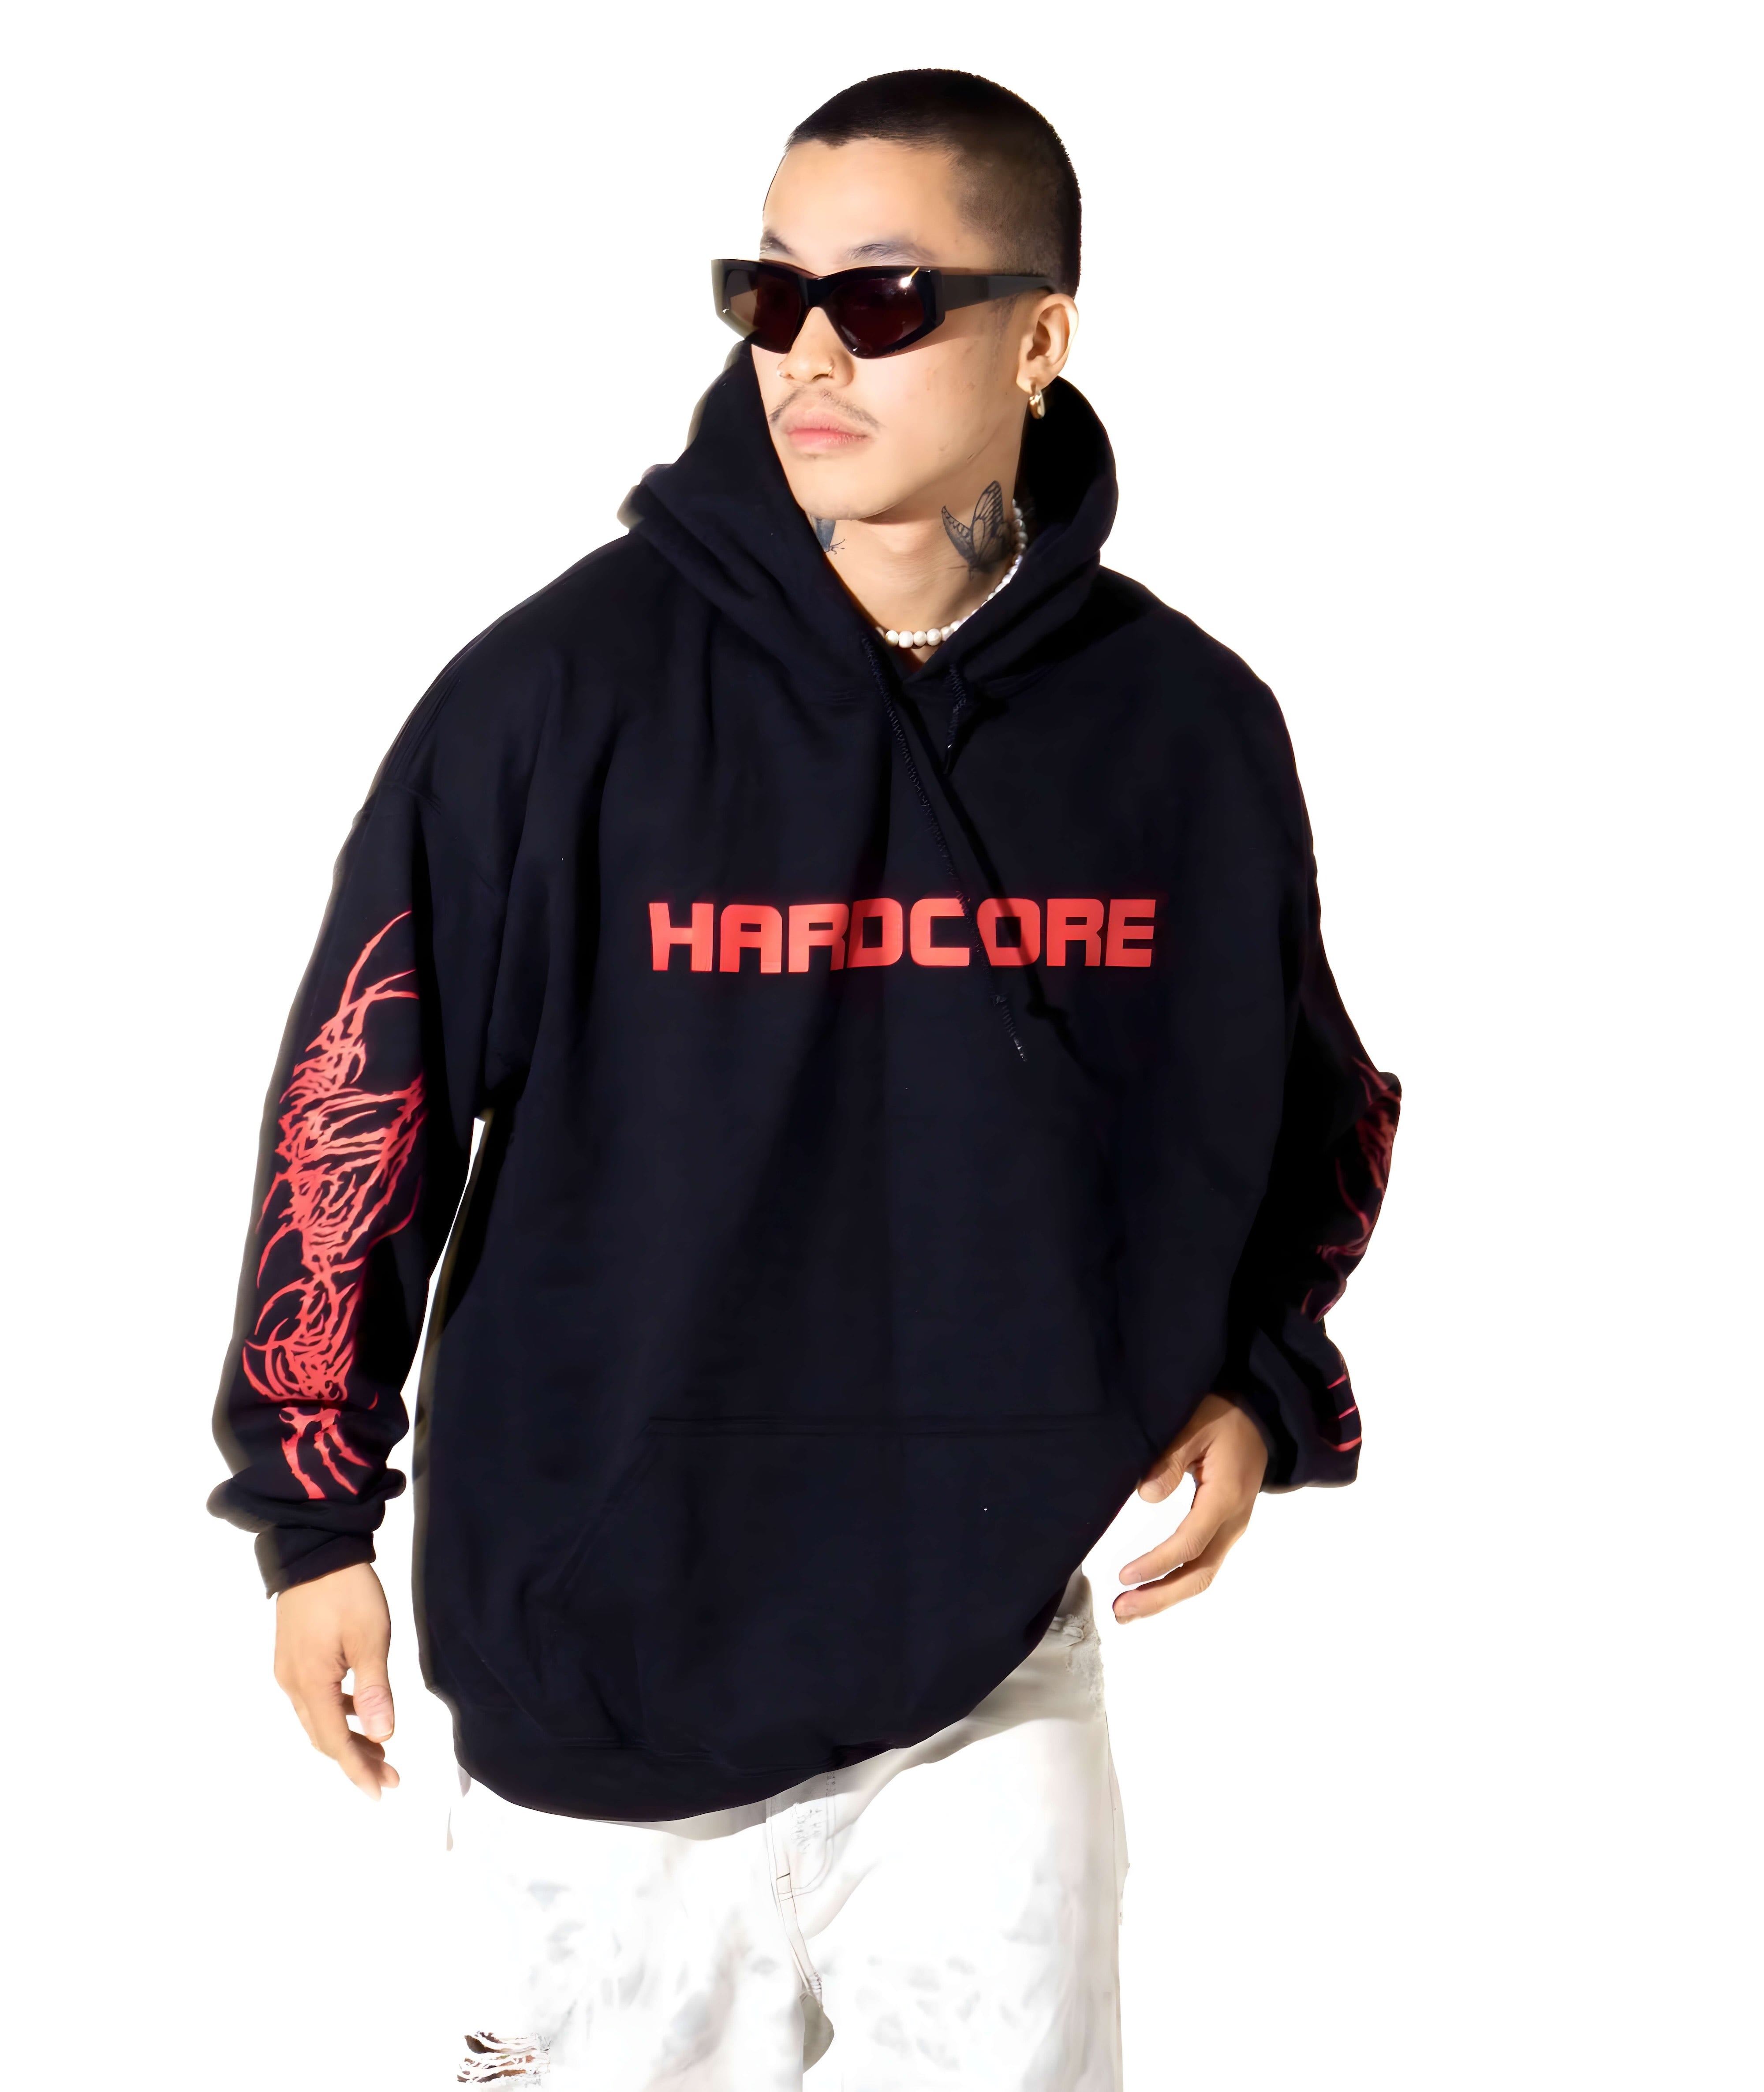 hardcore hoodie black ravemore r+